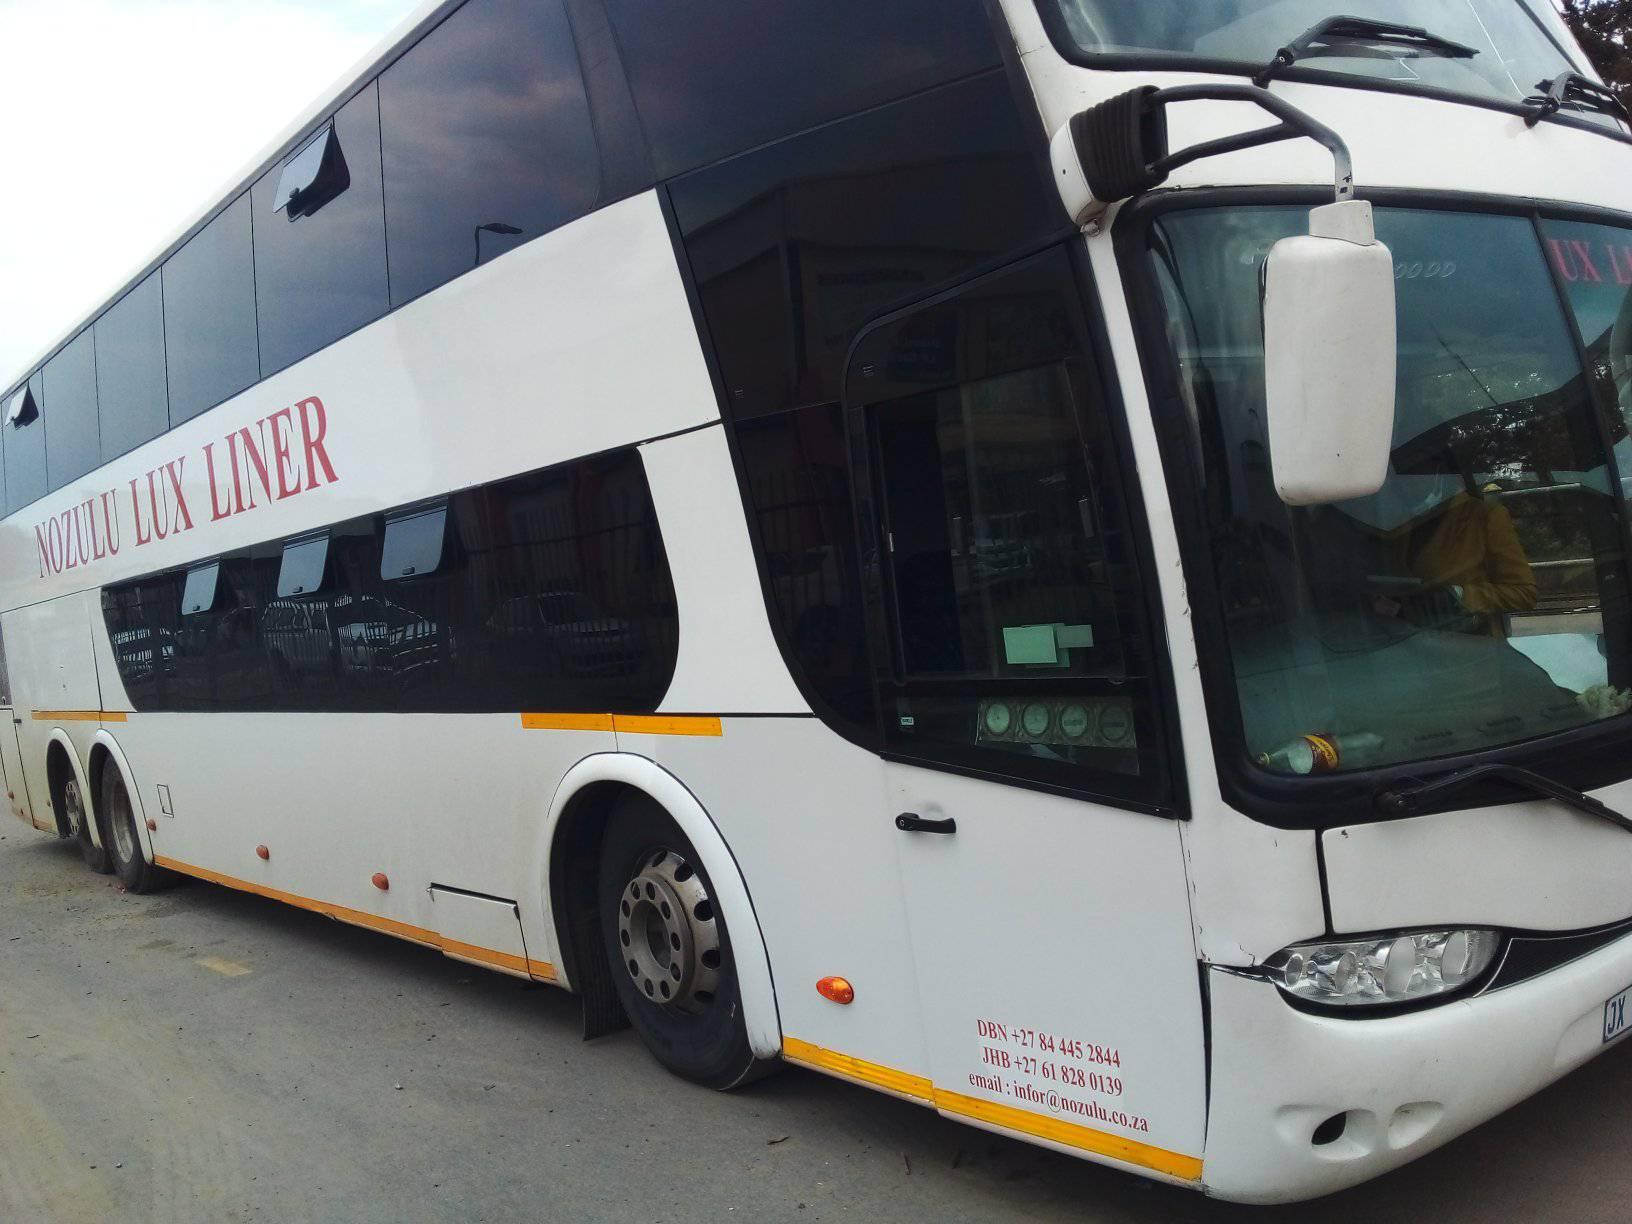 A Nozulu Lux Liner coach on fire in Durban [Video]